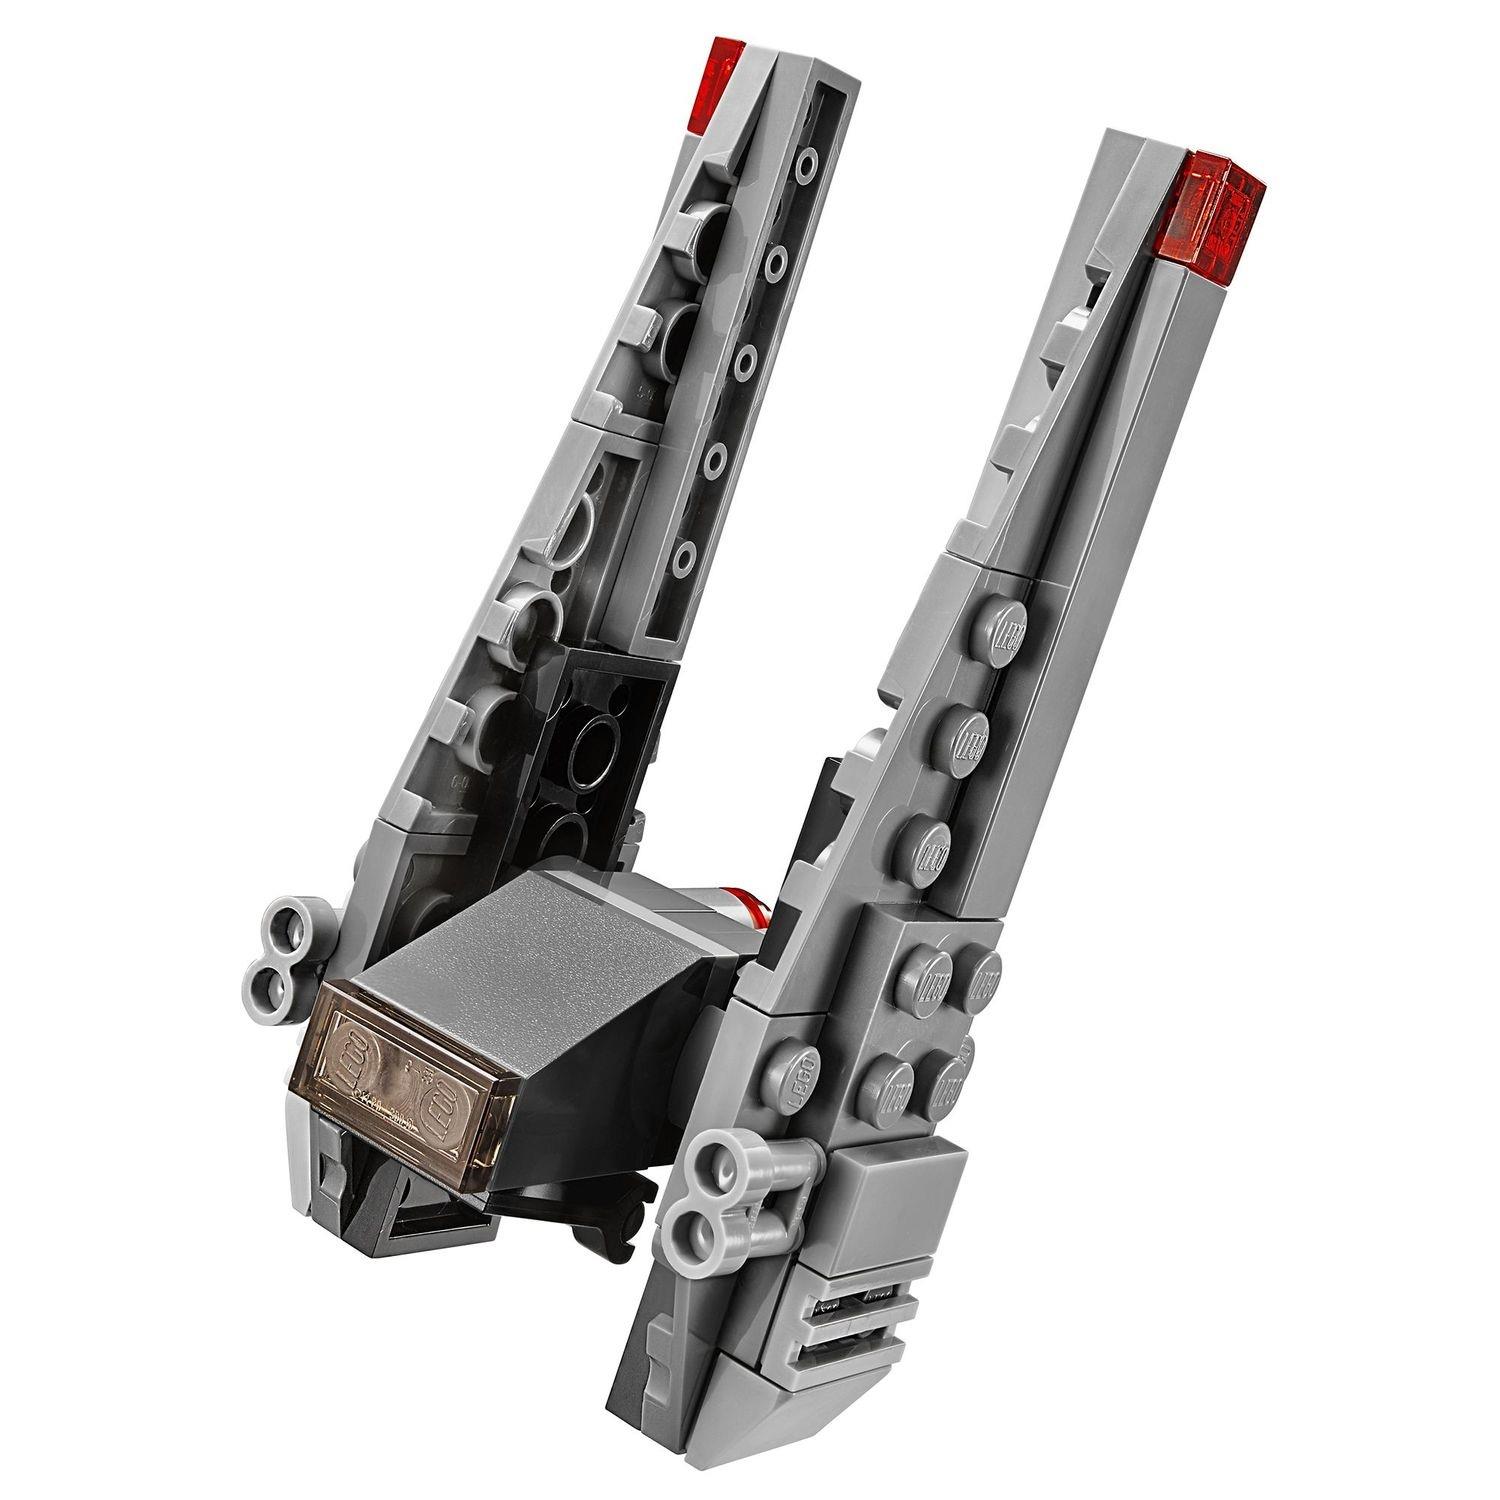 Lego Disney LEGO Star Wars 30279 Kylo Ren's Command Shuttle Polybag brand new 